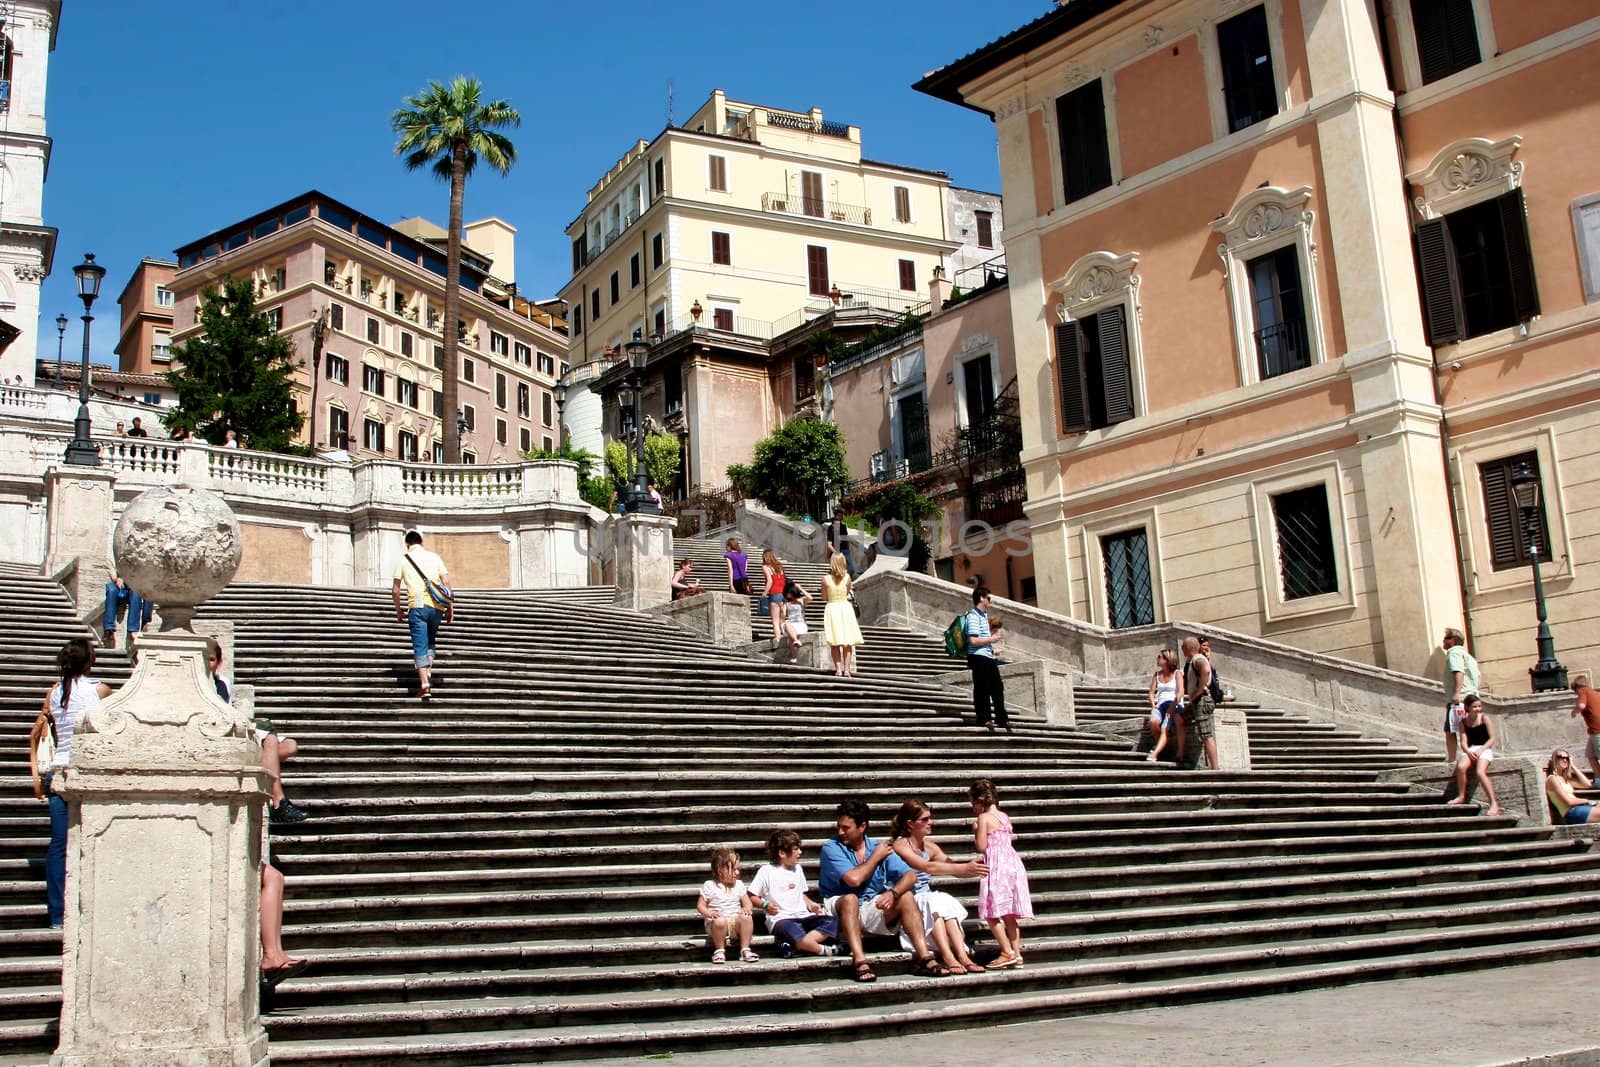 Spanish steps in Rome by Bildehagen